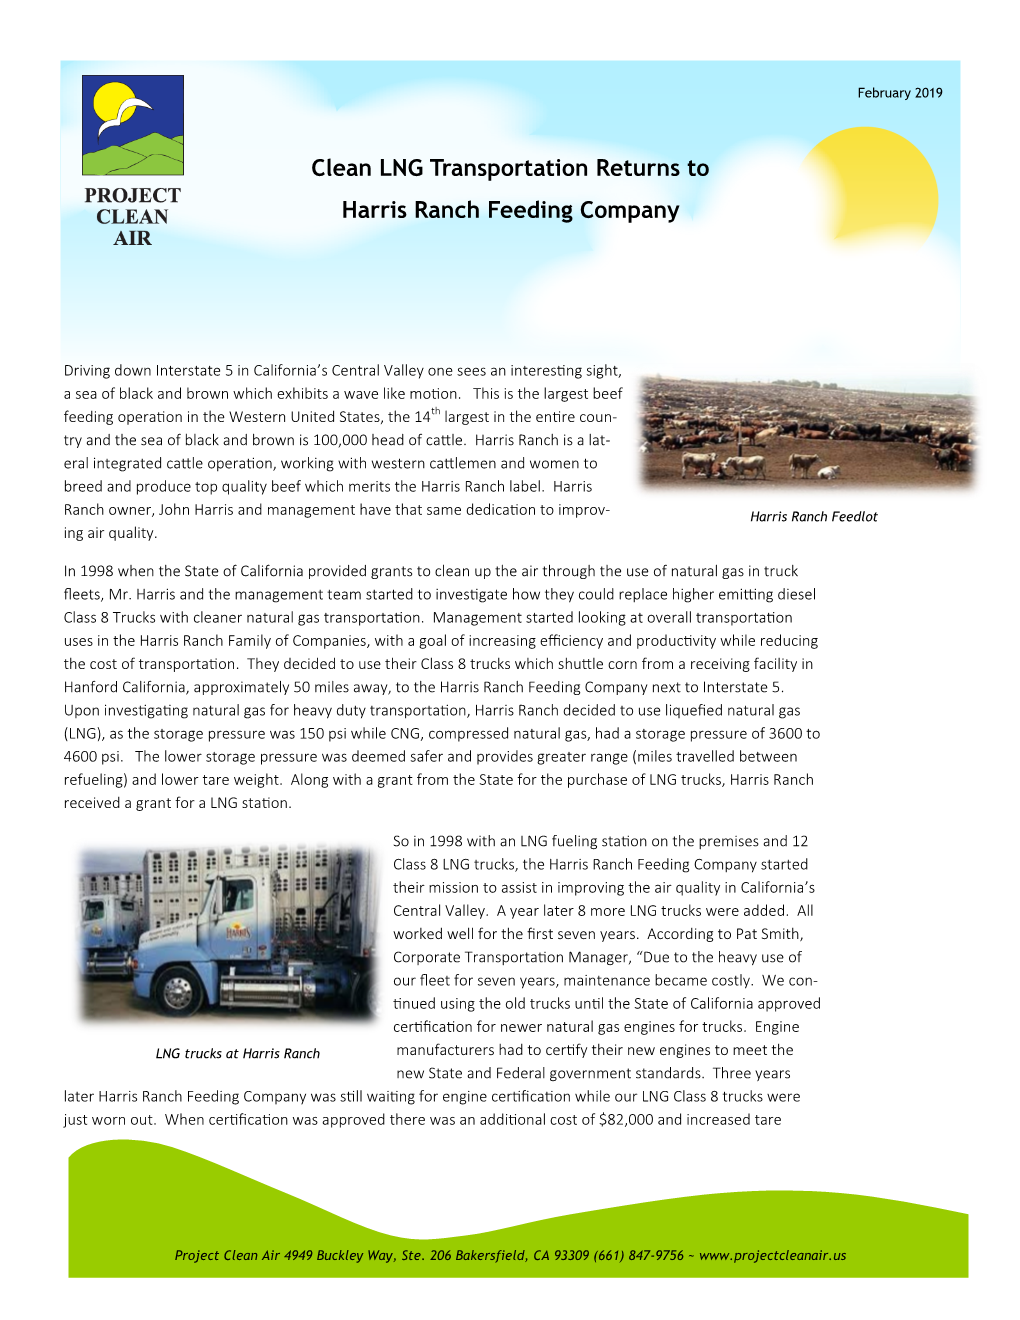 Clean LNG Transportation Returns to Harris Ranch Feeding Company